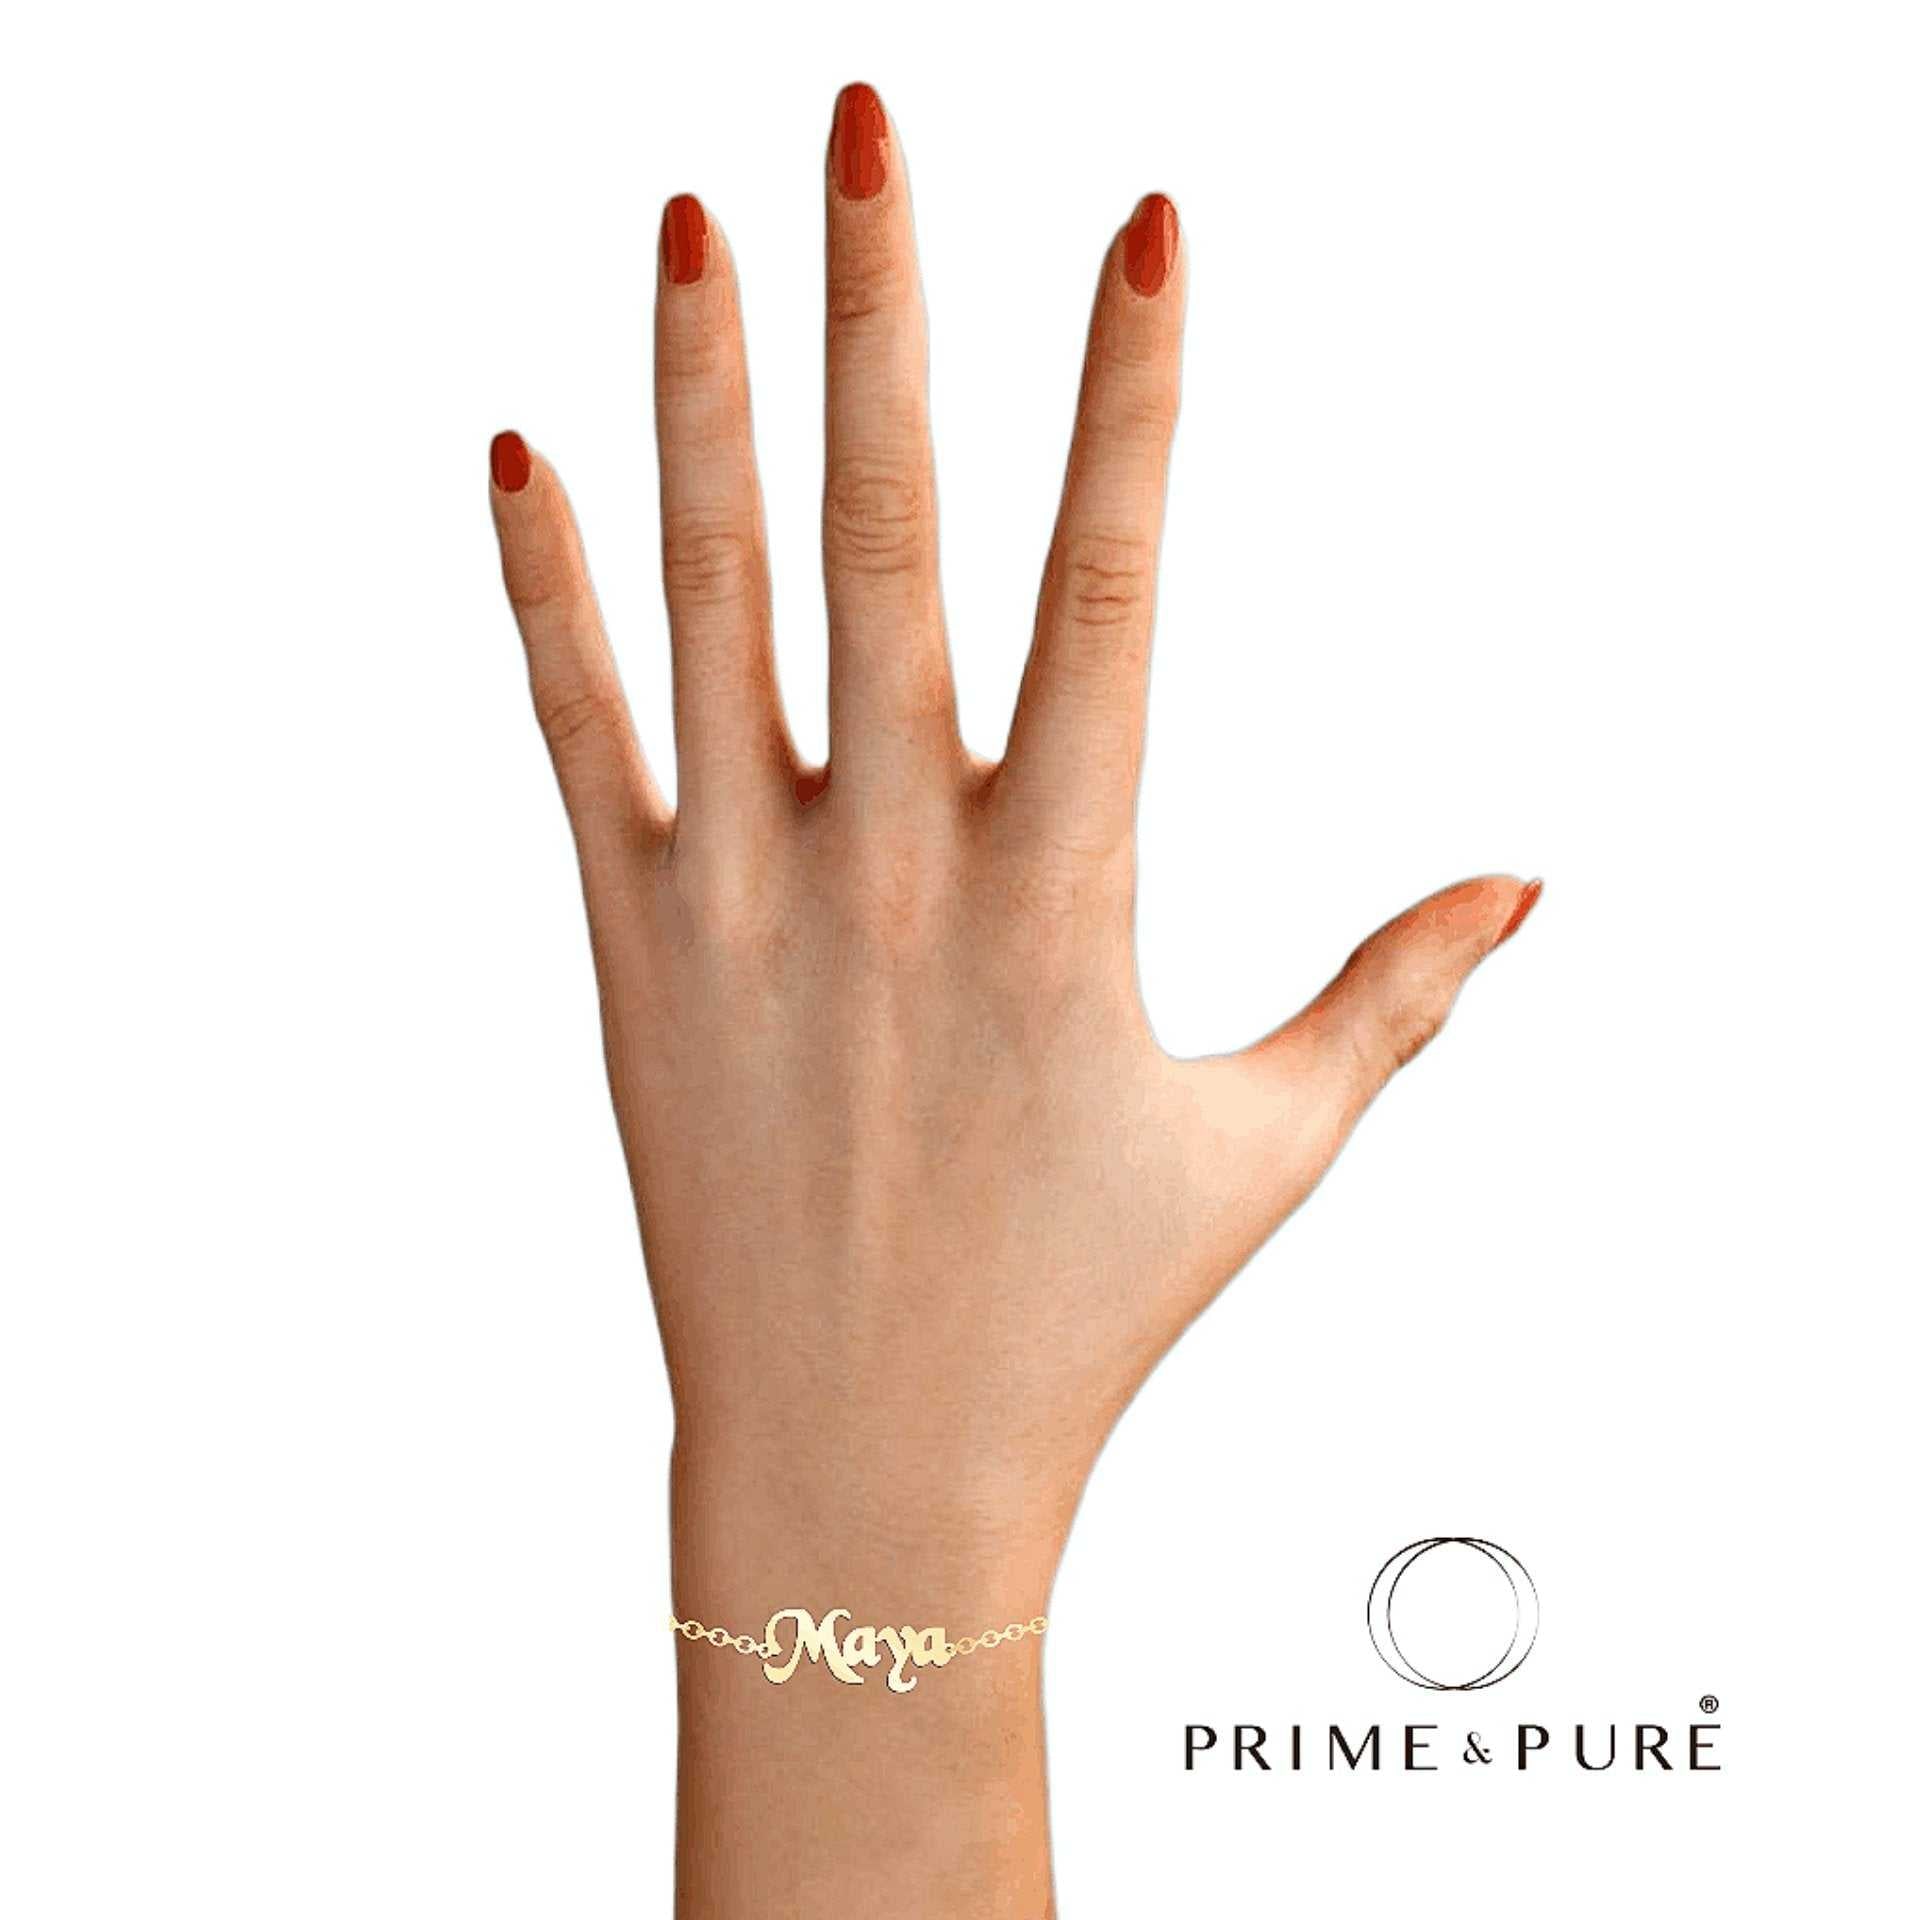 Chance Name Bracelet - Prime & Pure